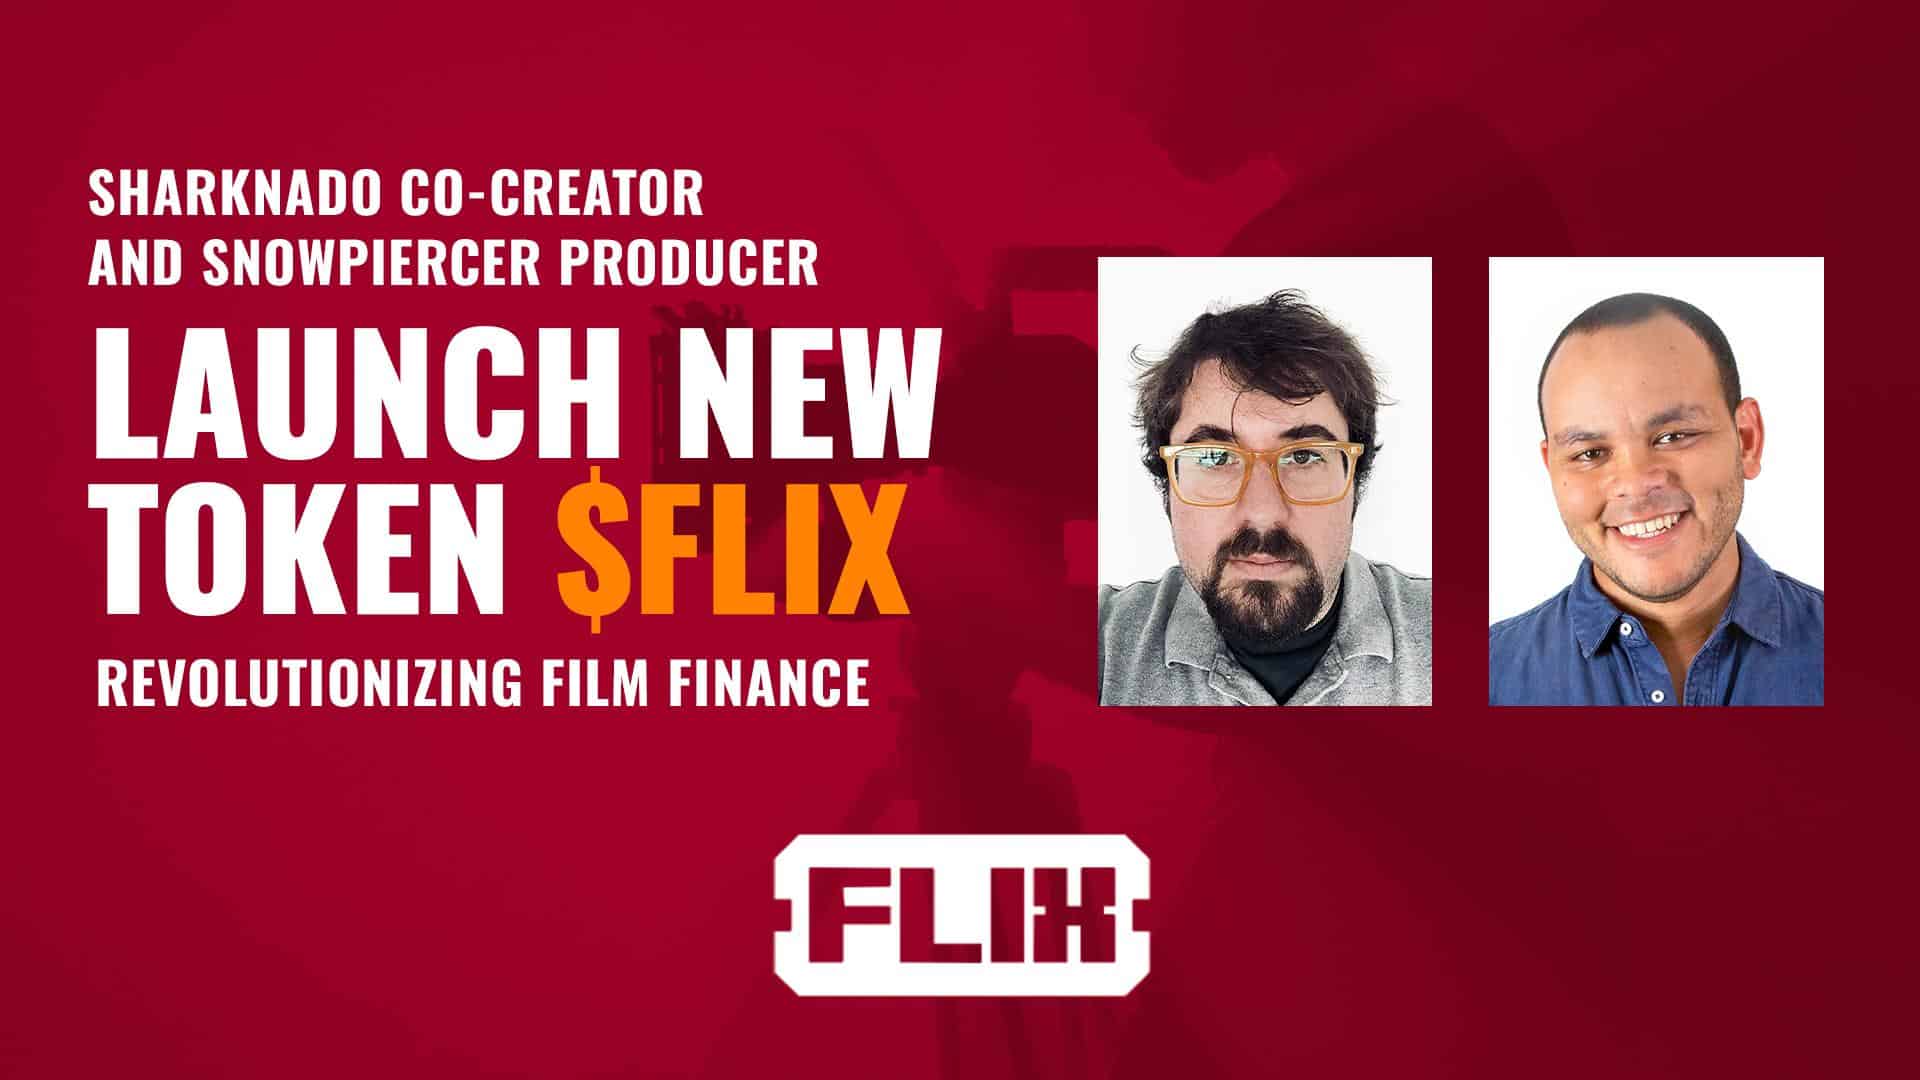 Sharknado Co-Creator and Snowpiercer Producer Launch New Token FLIX